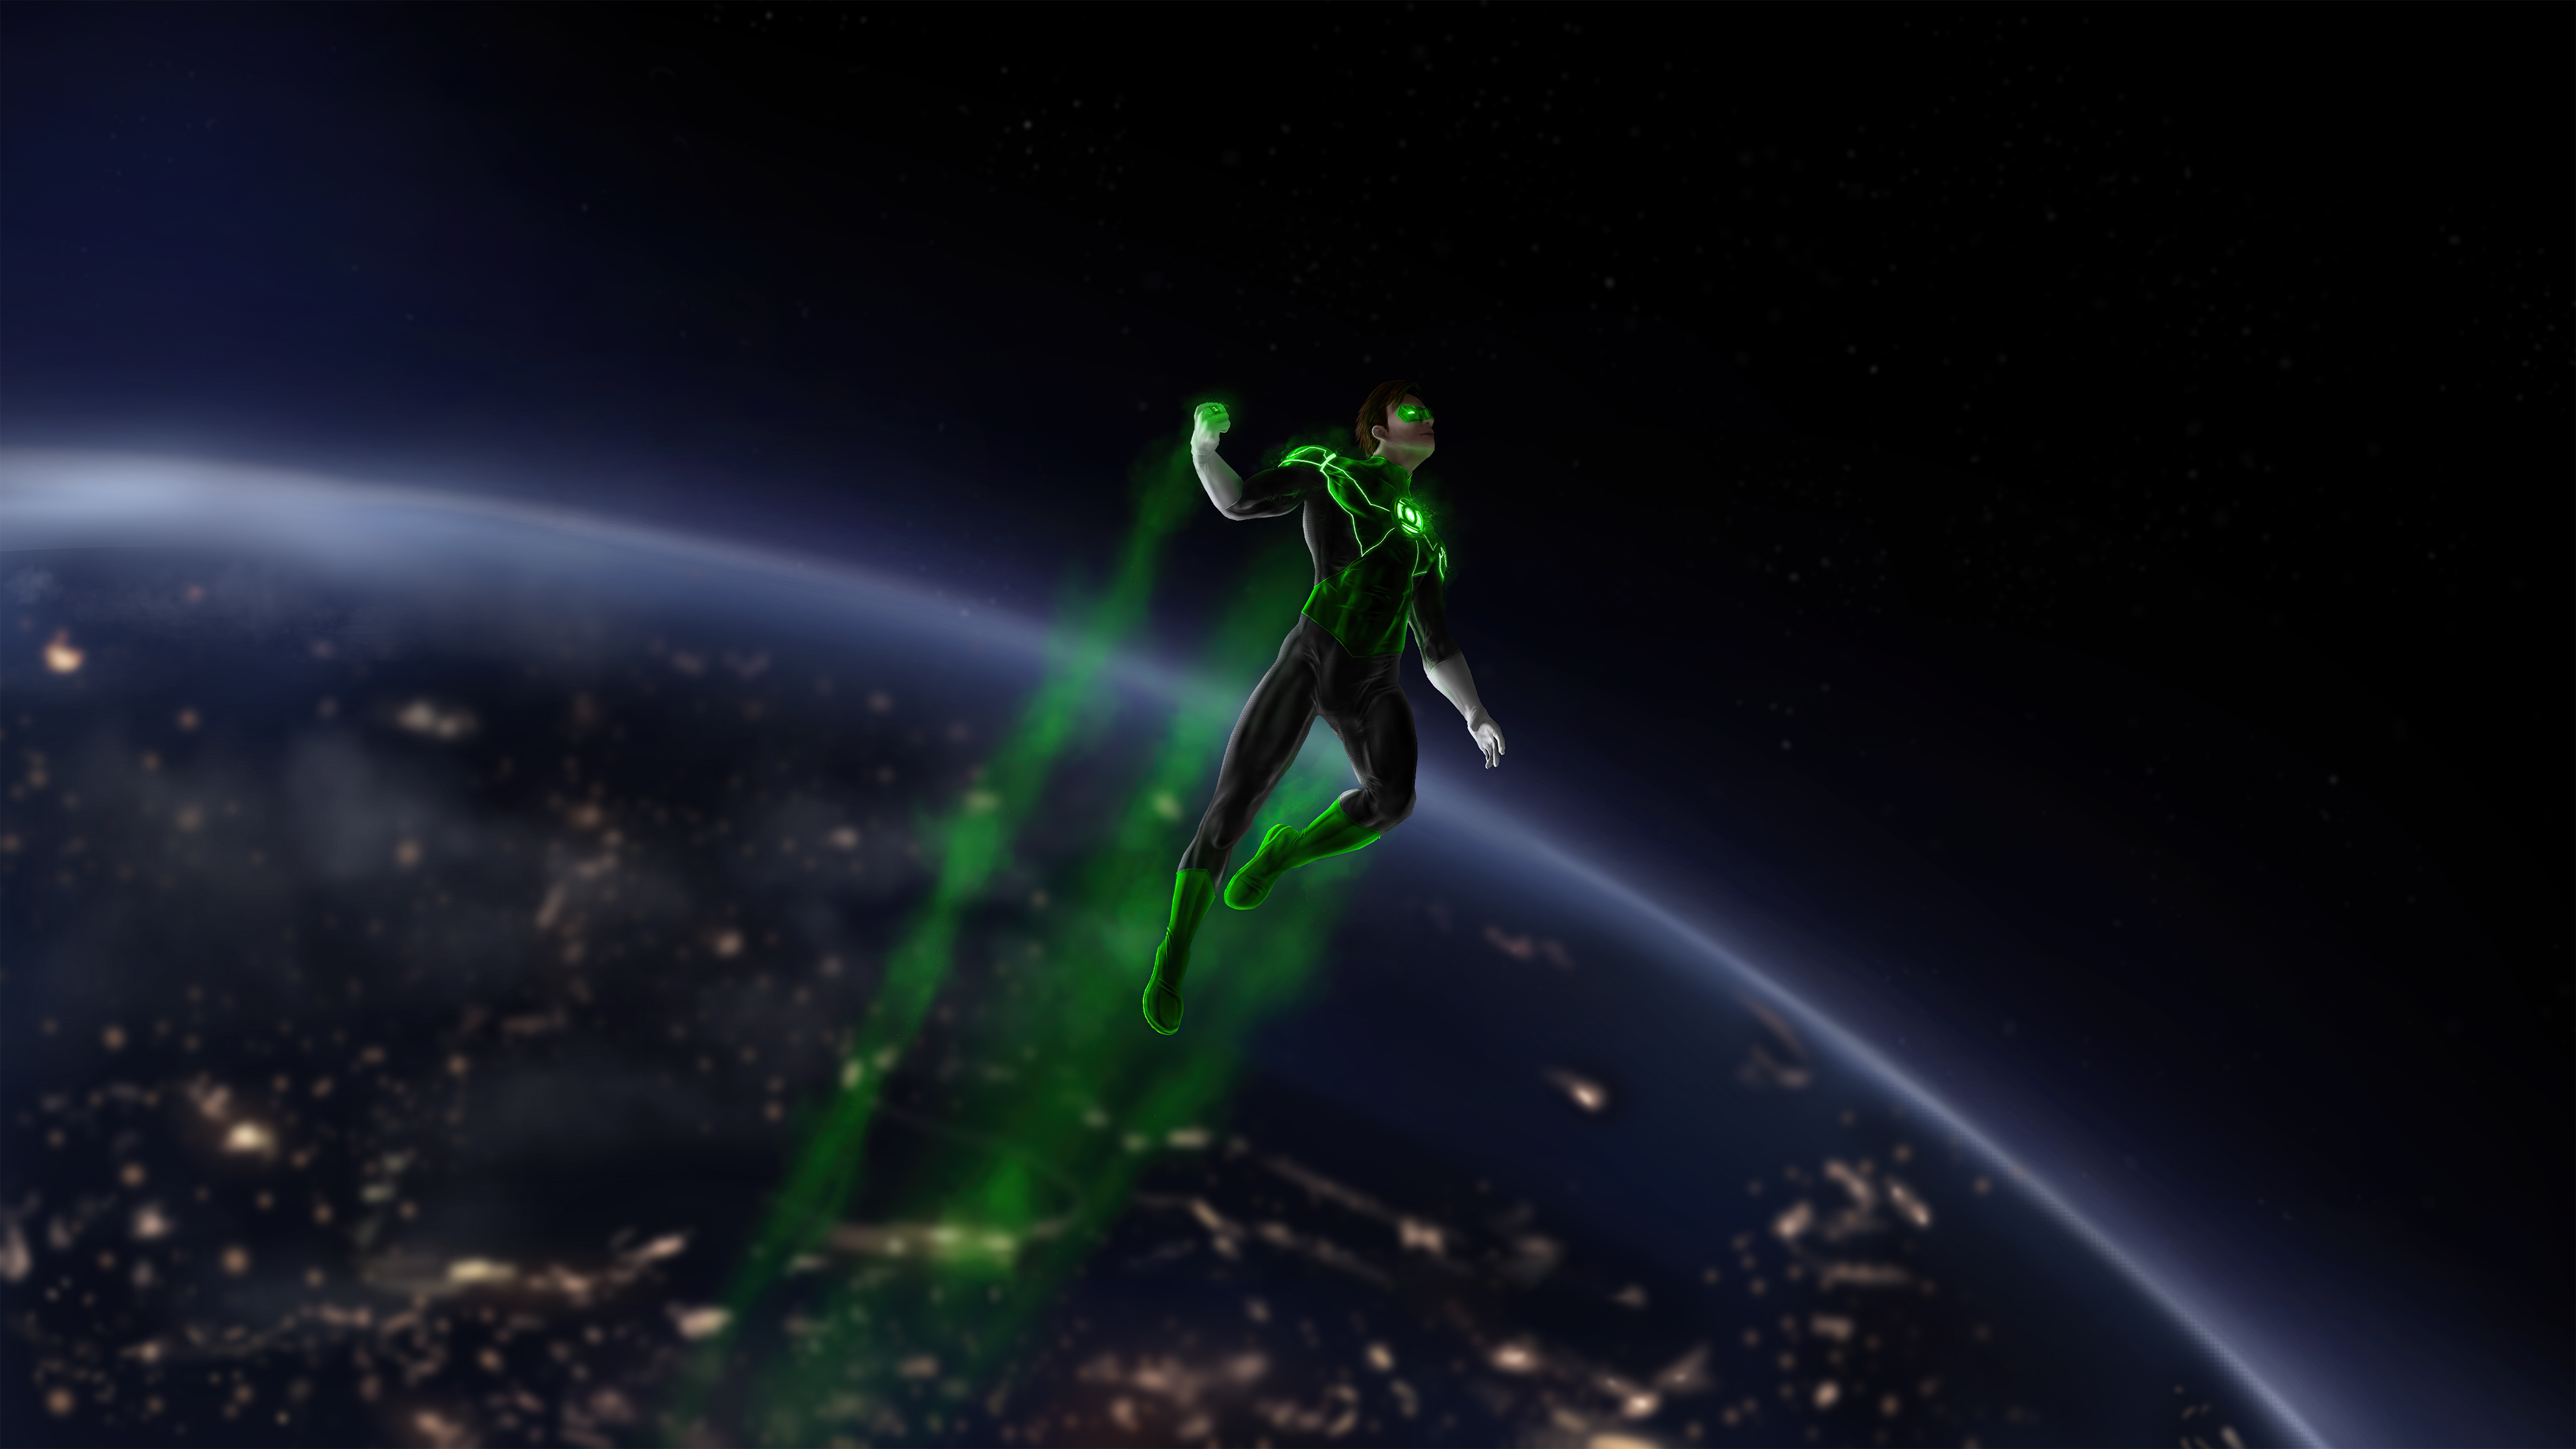 Descarga gratuita de fondo de pantalla para móvil de Historietas, Superhéroe, Dc Comics, Linterna Verde, Hal Jordan.